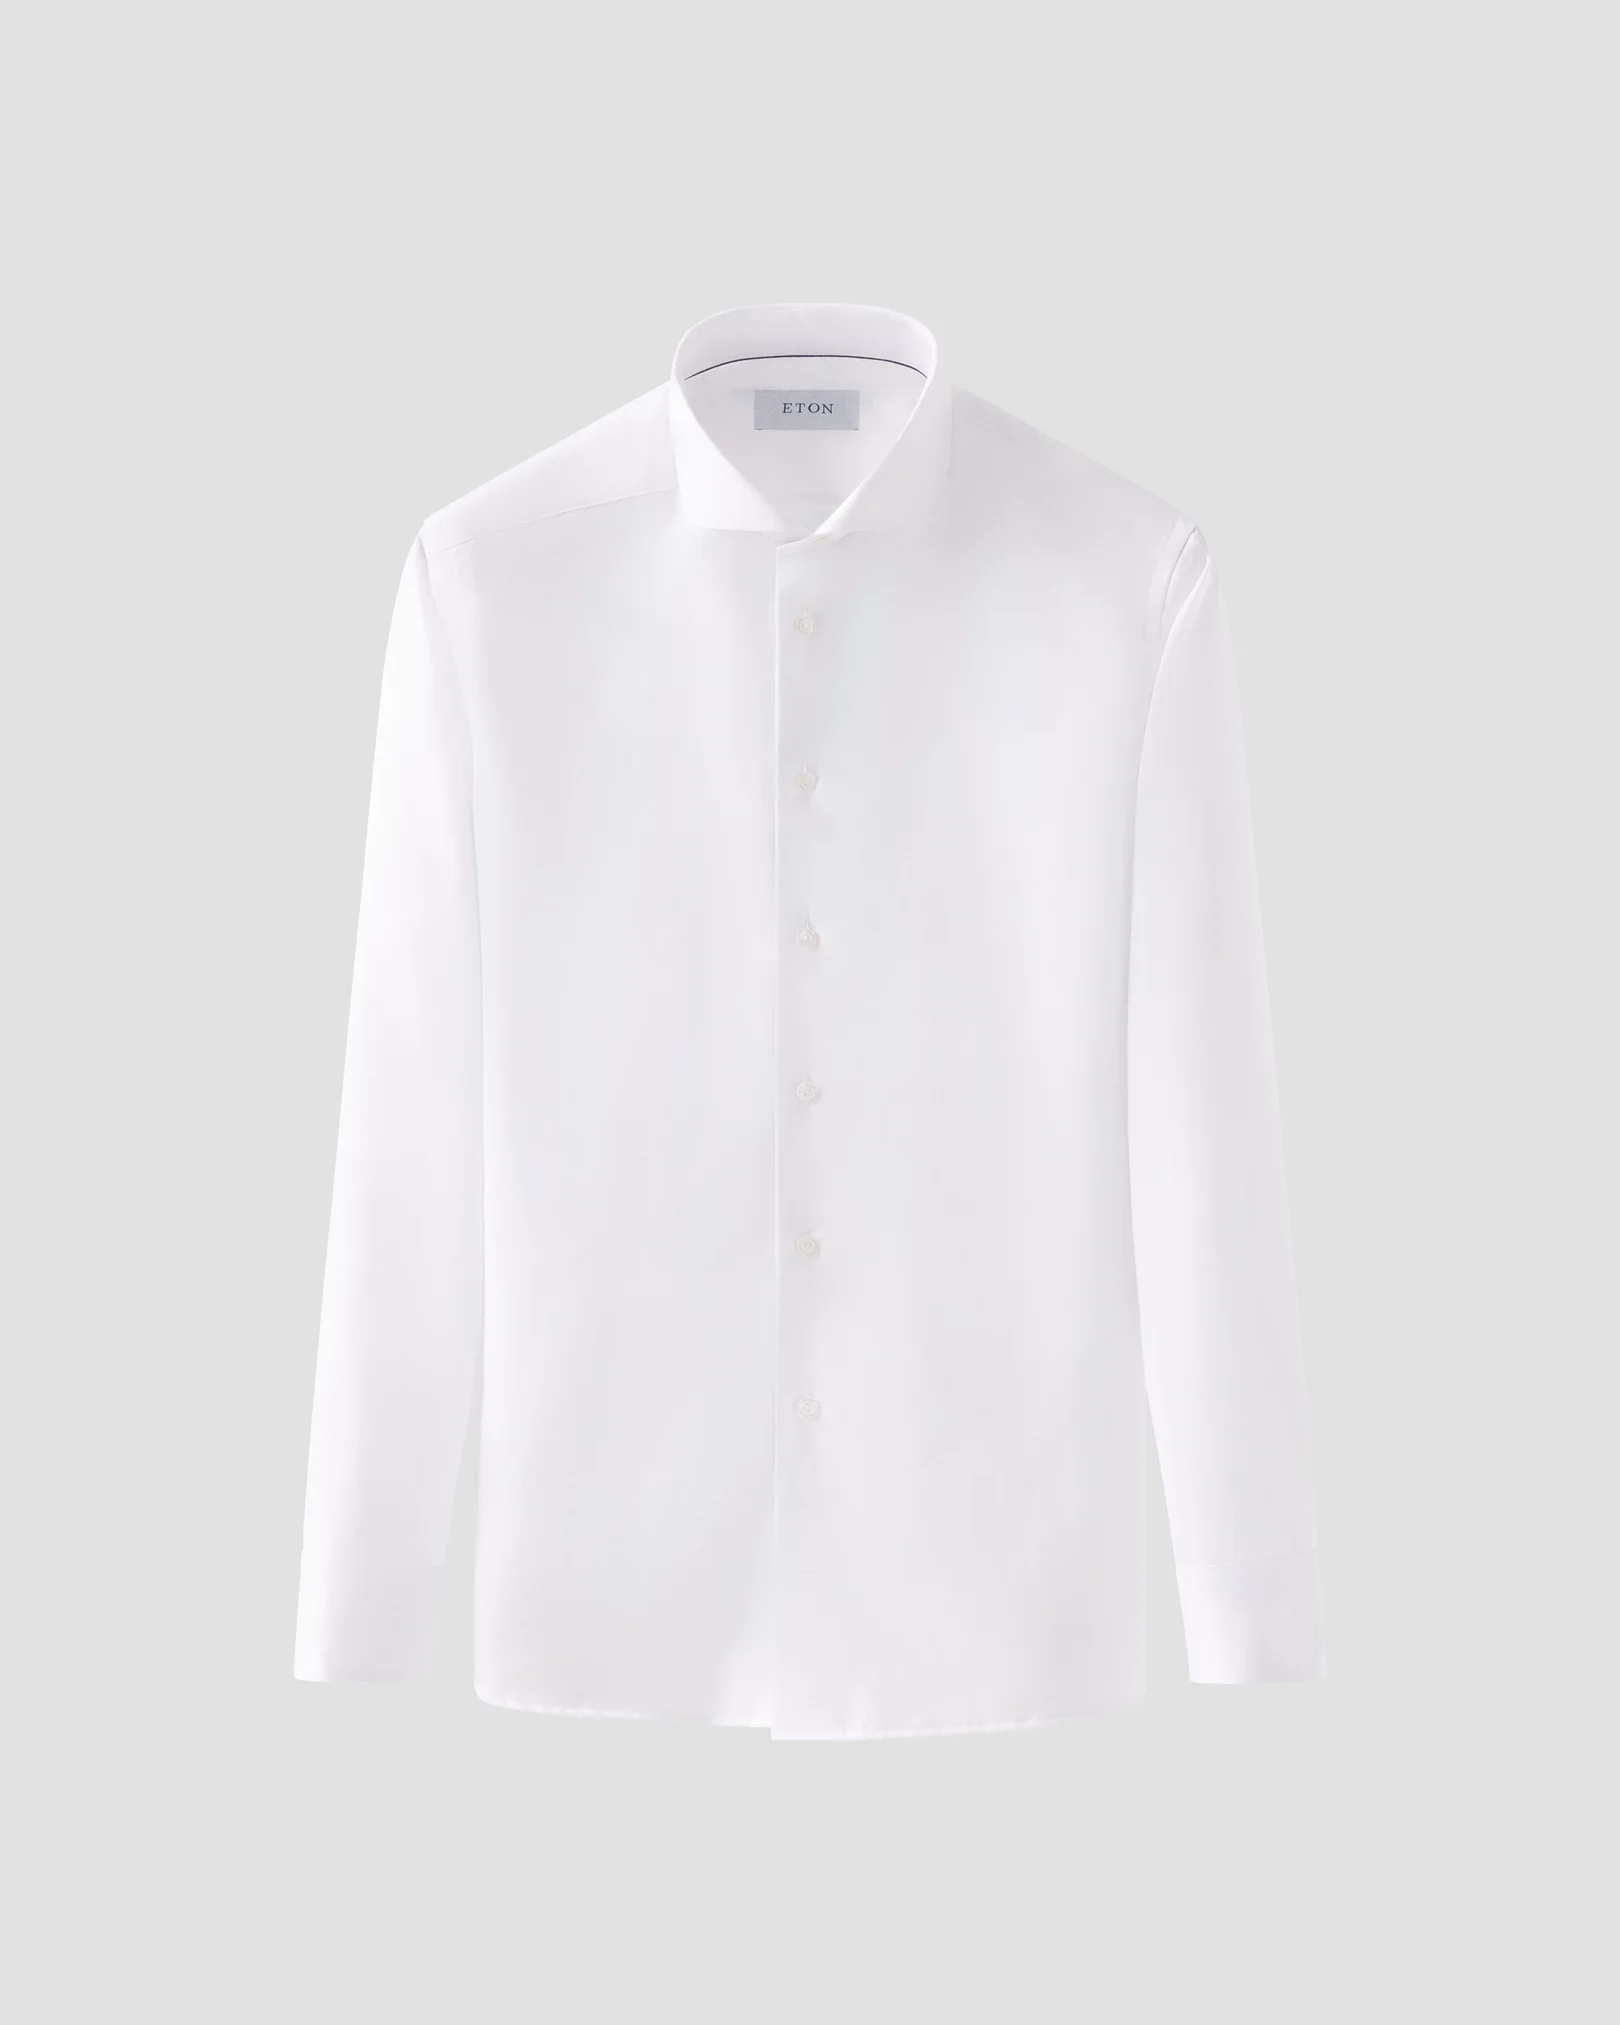 Eton - white extreme cut away shirt